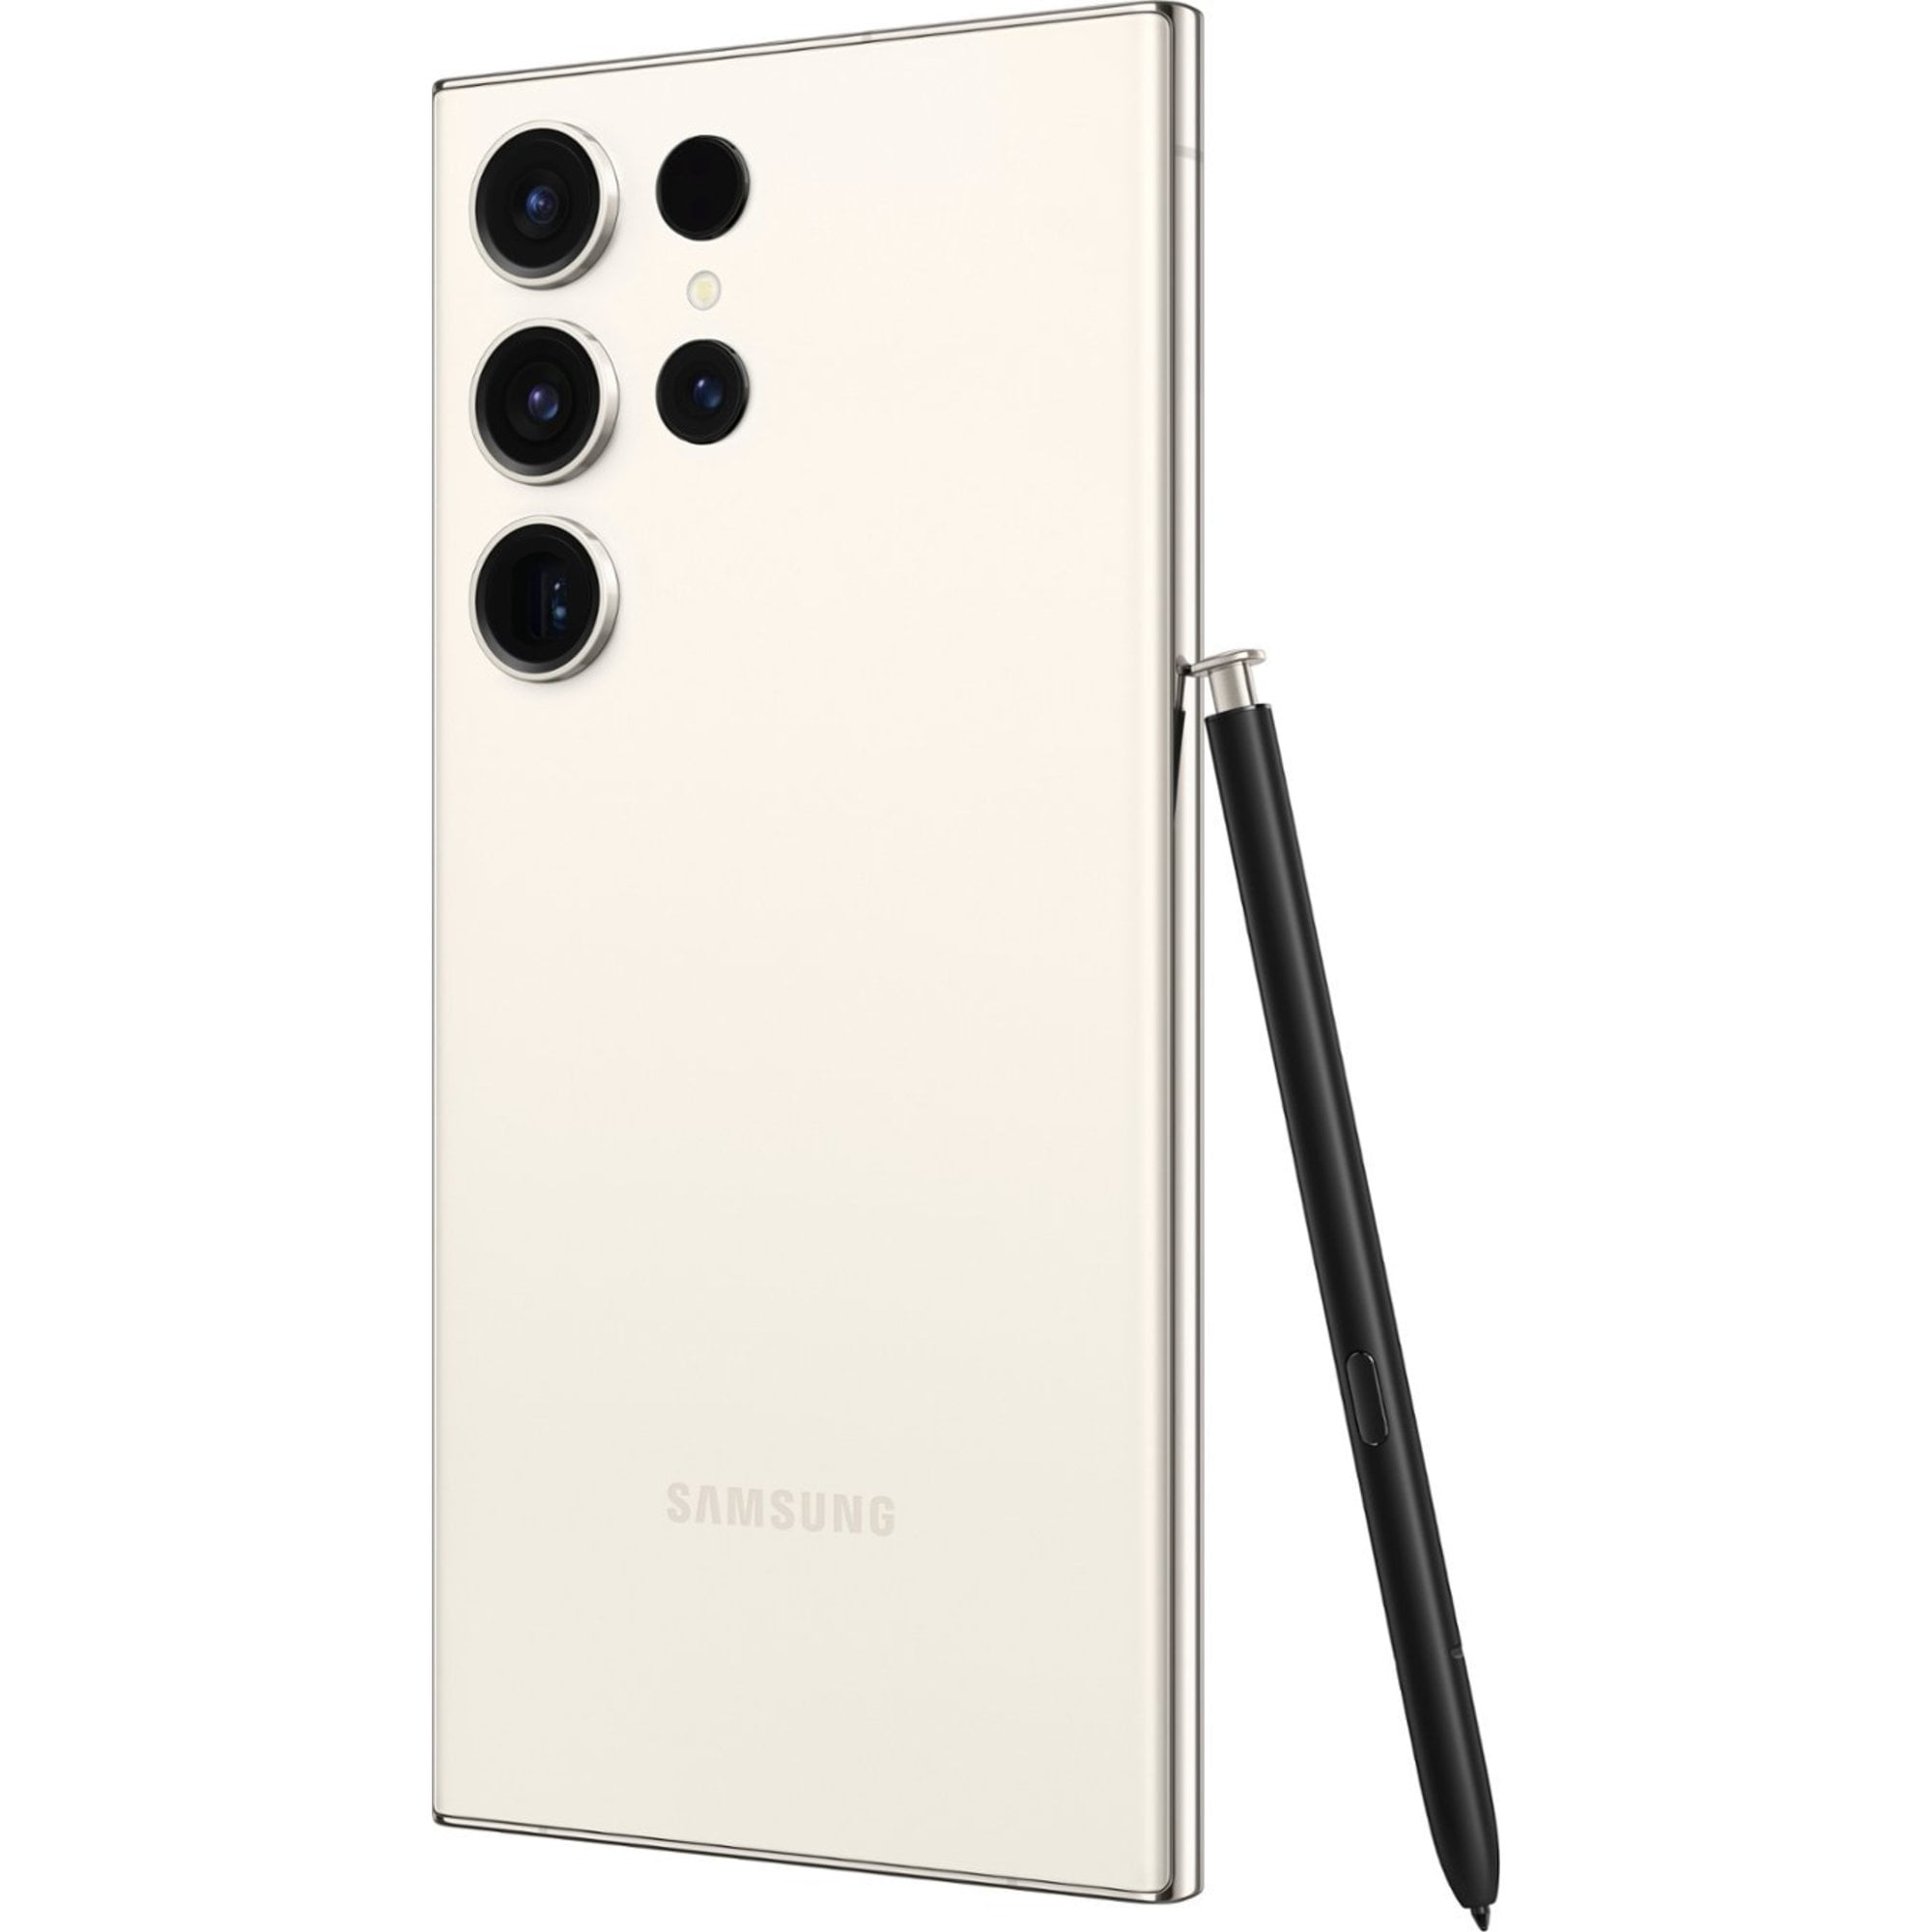 Samsung Galaxy S23 Ultra 512GB Unlocked Android Smartphone with 200MP  Camera, S Pen, 8K Video, Long Battery Life - Phantom Black